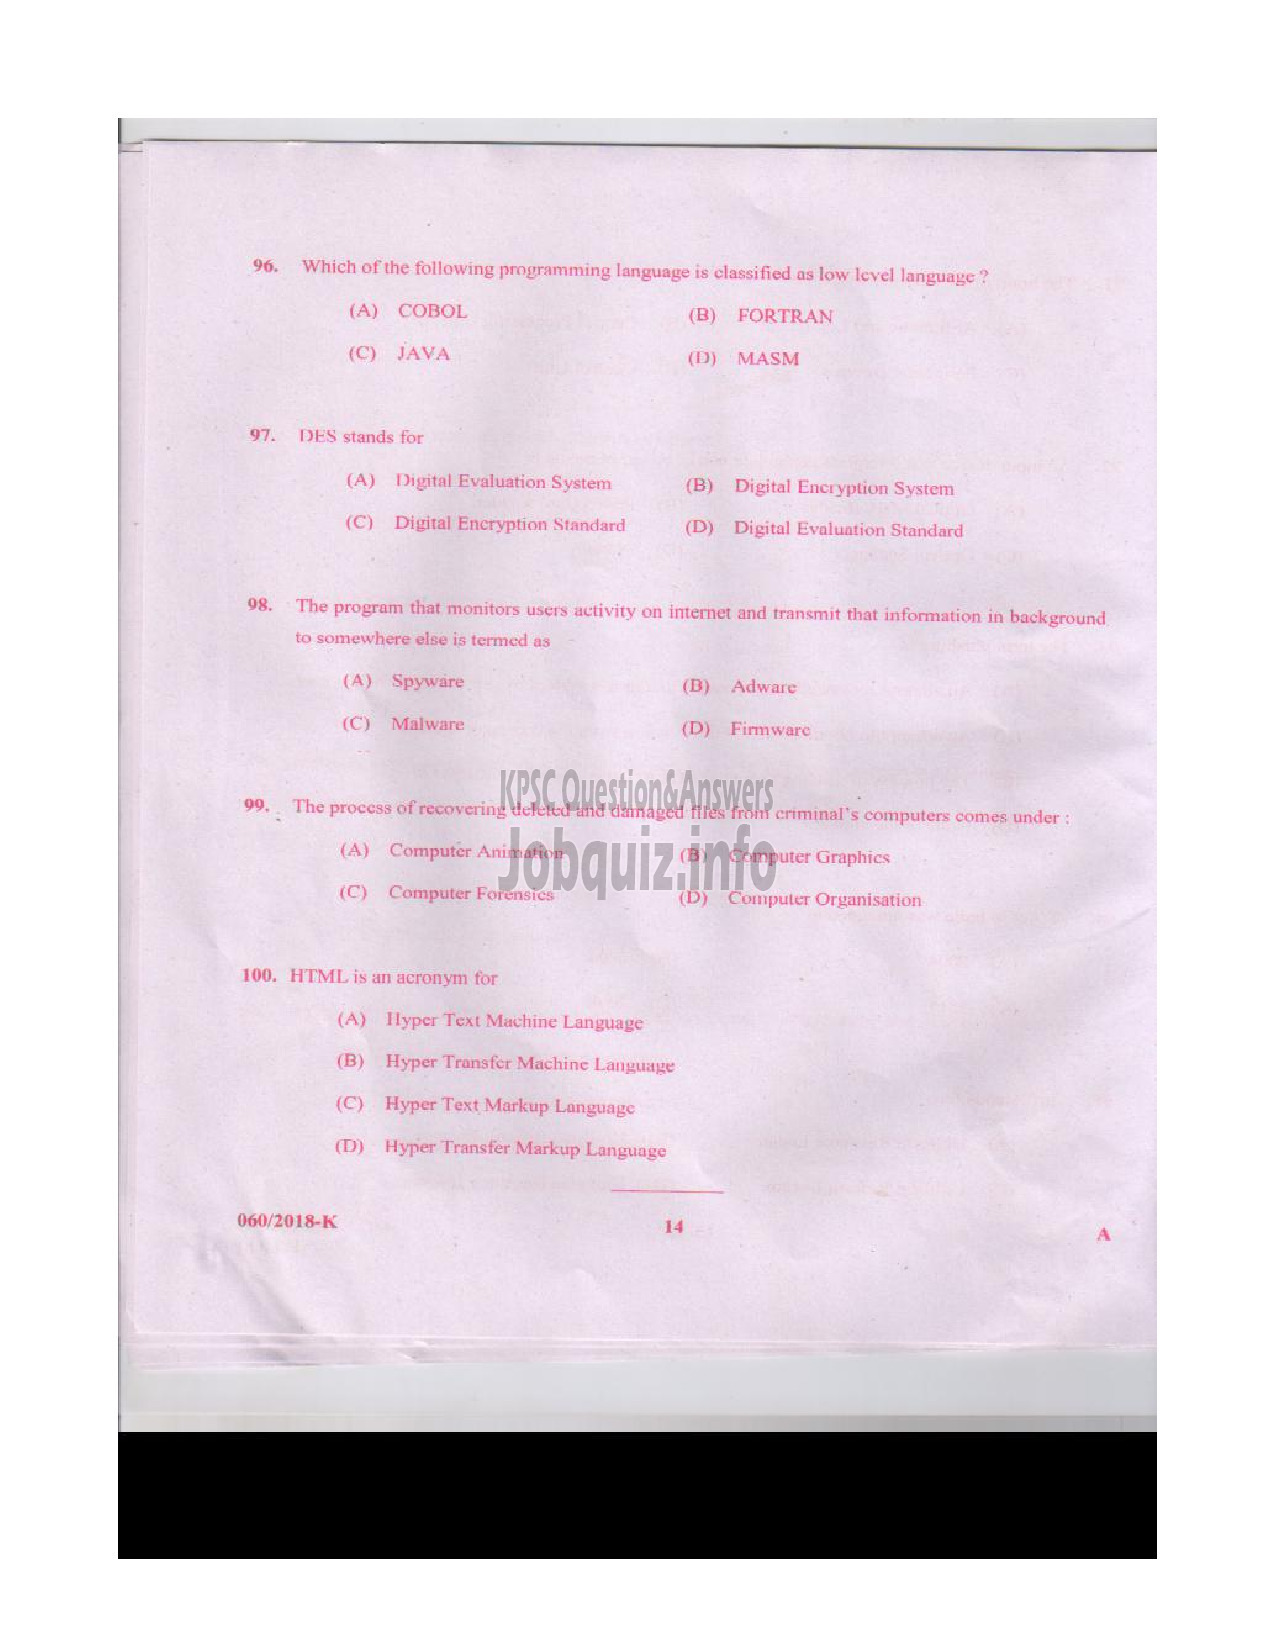 Kerala PSC Question Paper - JUNIOR ASSISTANT / CASHIER / ASSISTANT GRADE II / CLERK GR I KSFE LTD / KSEB LTD / KSRTC / FOAM MATTINGS ETC ENGLISH / KANNADA -13